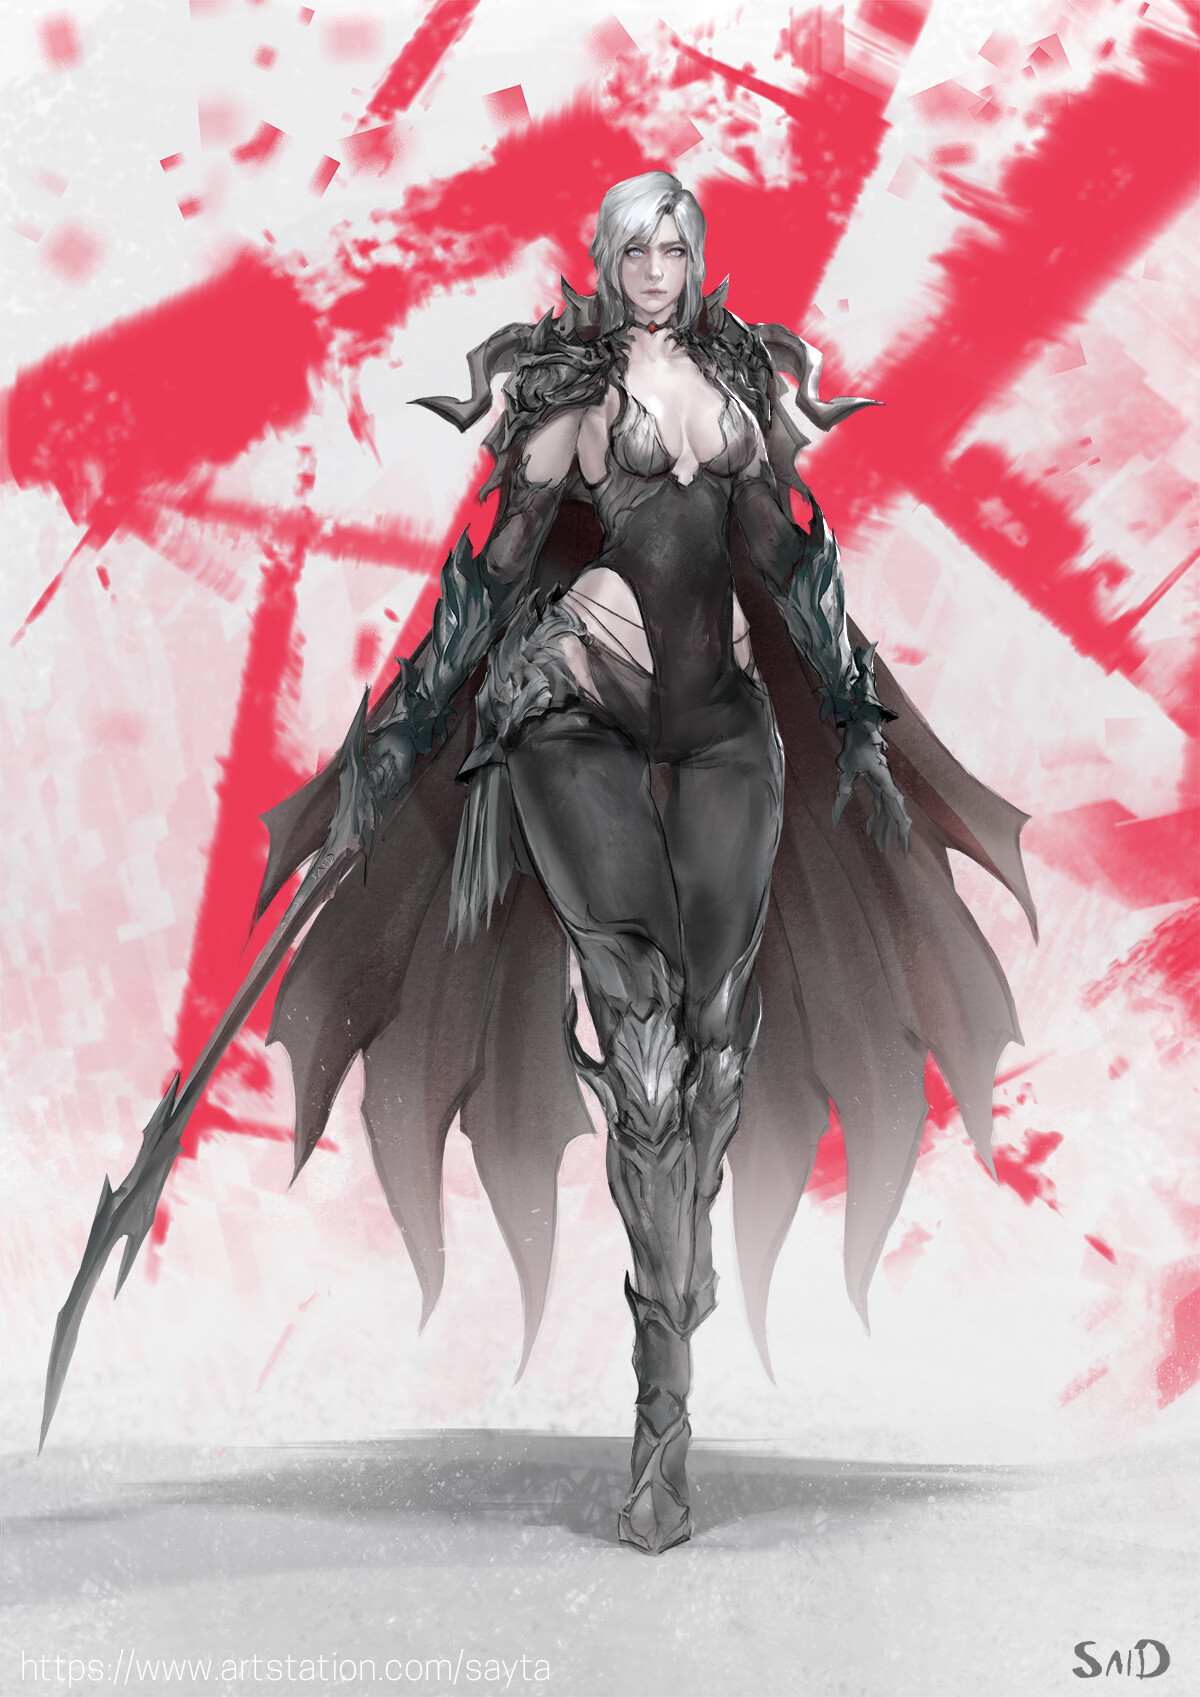 Dark Knight - Anime Manga World Wallpapers and Images - Desktop Nexus Groups